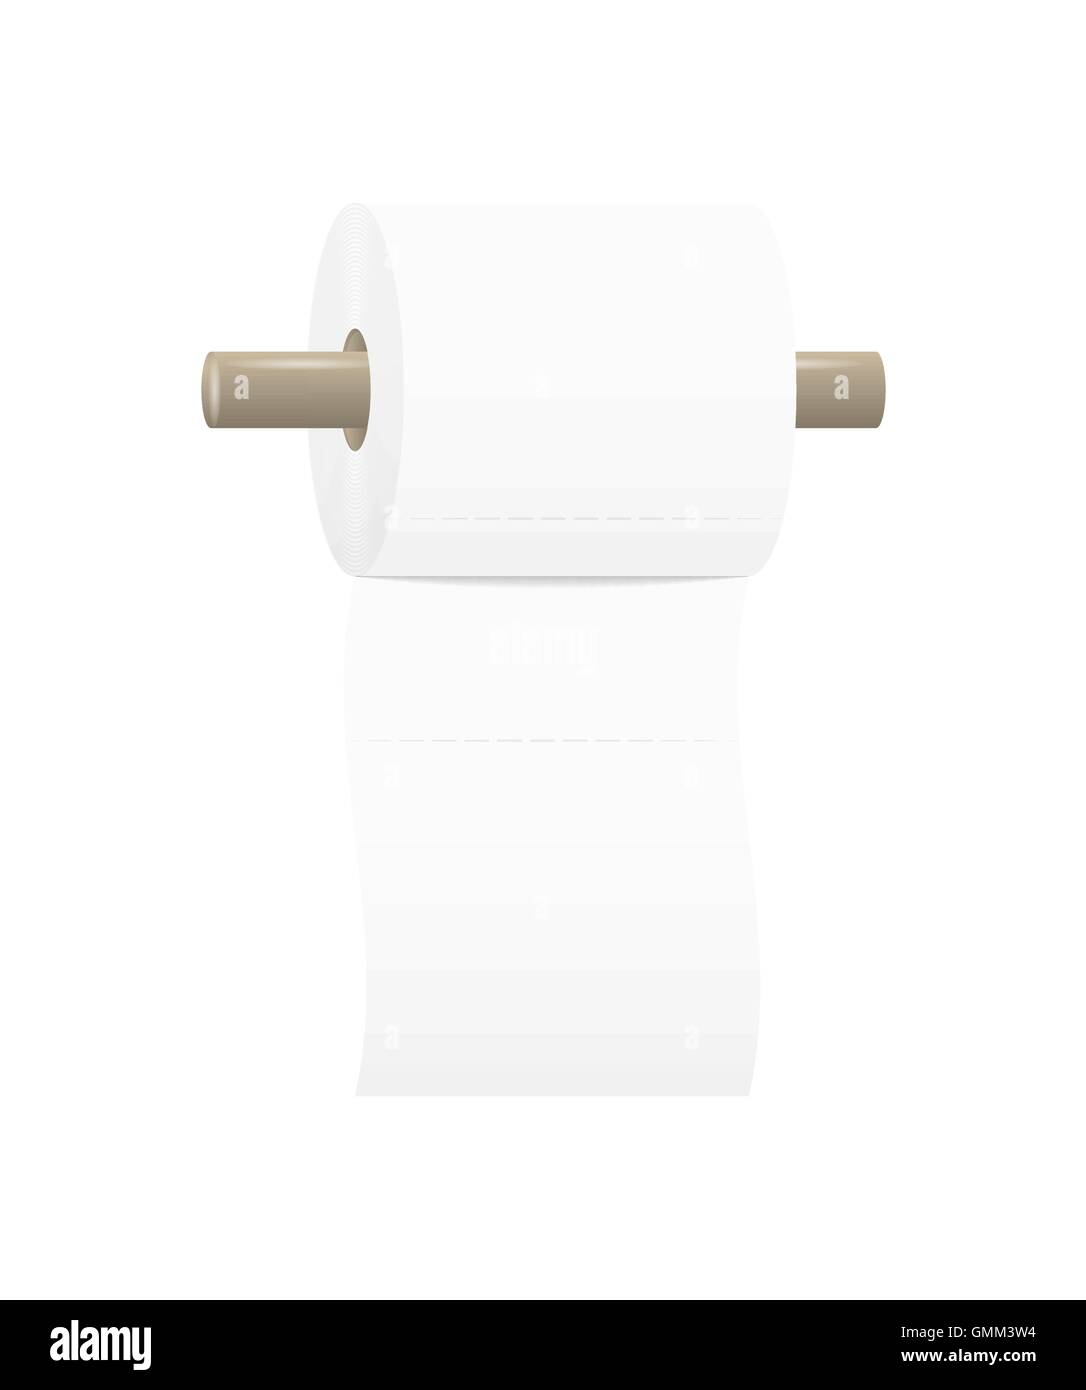 toilet paper roll Stock Vector